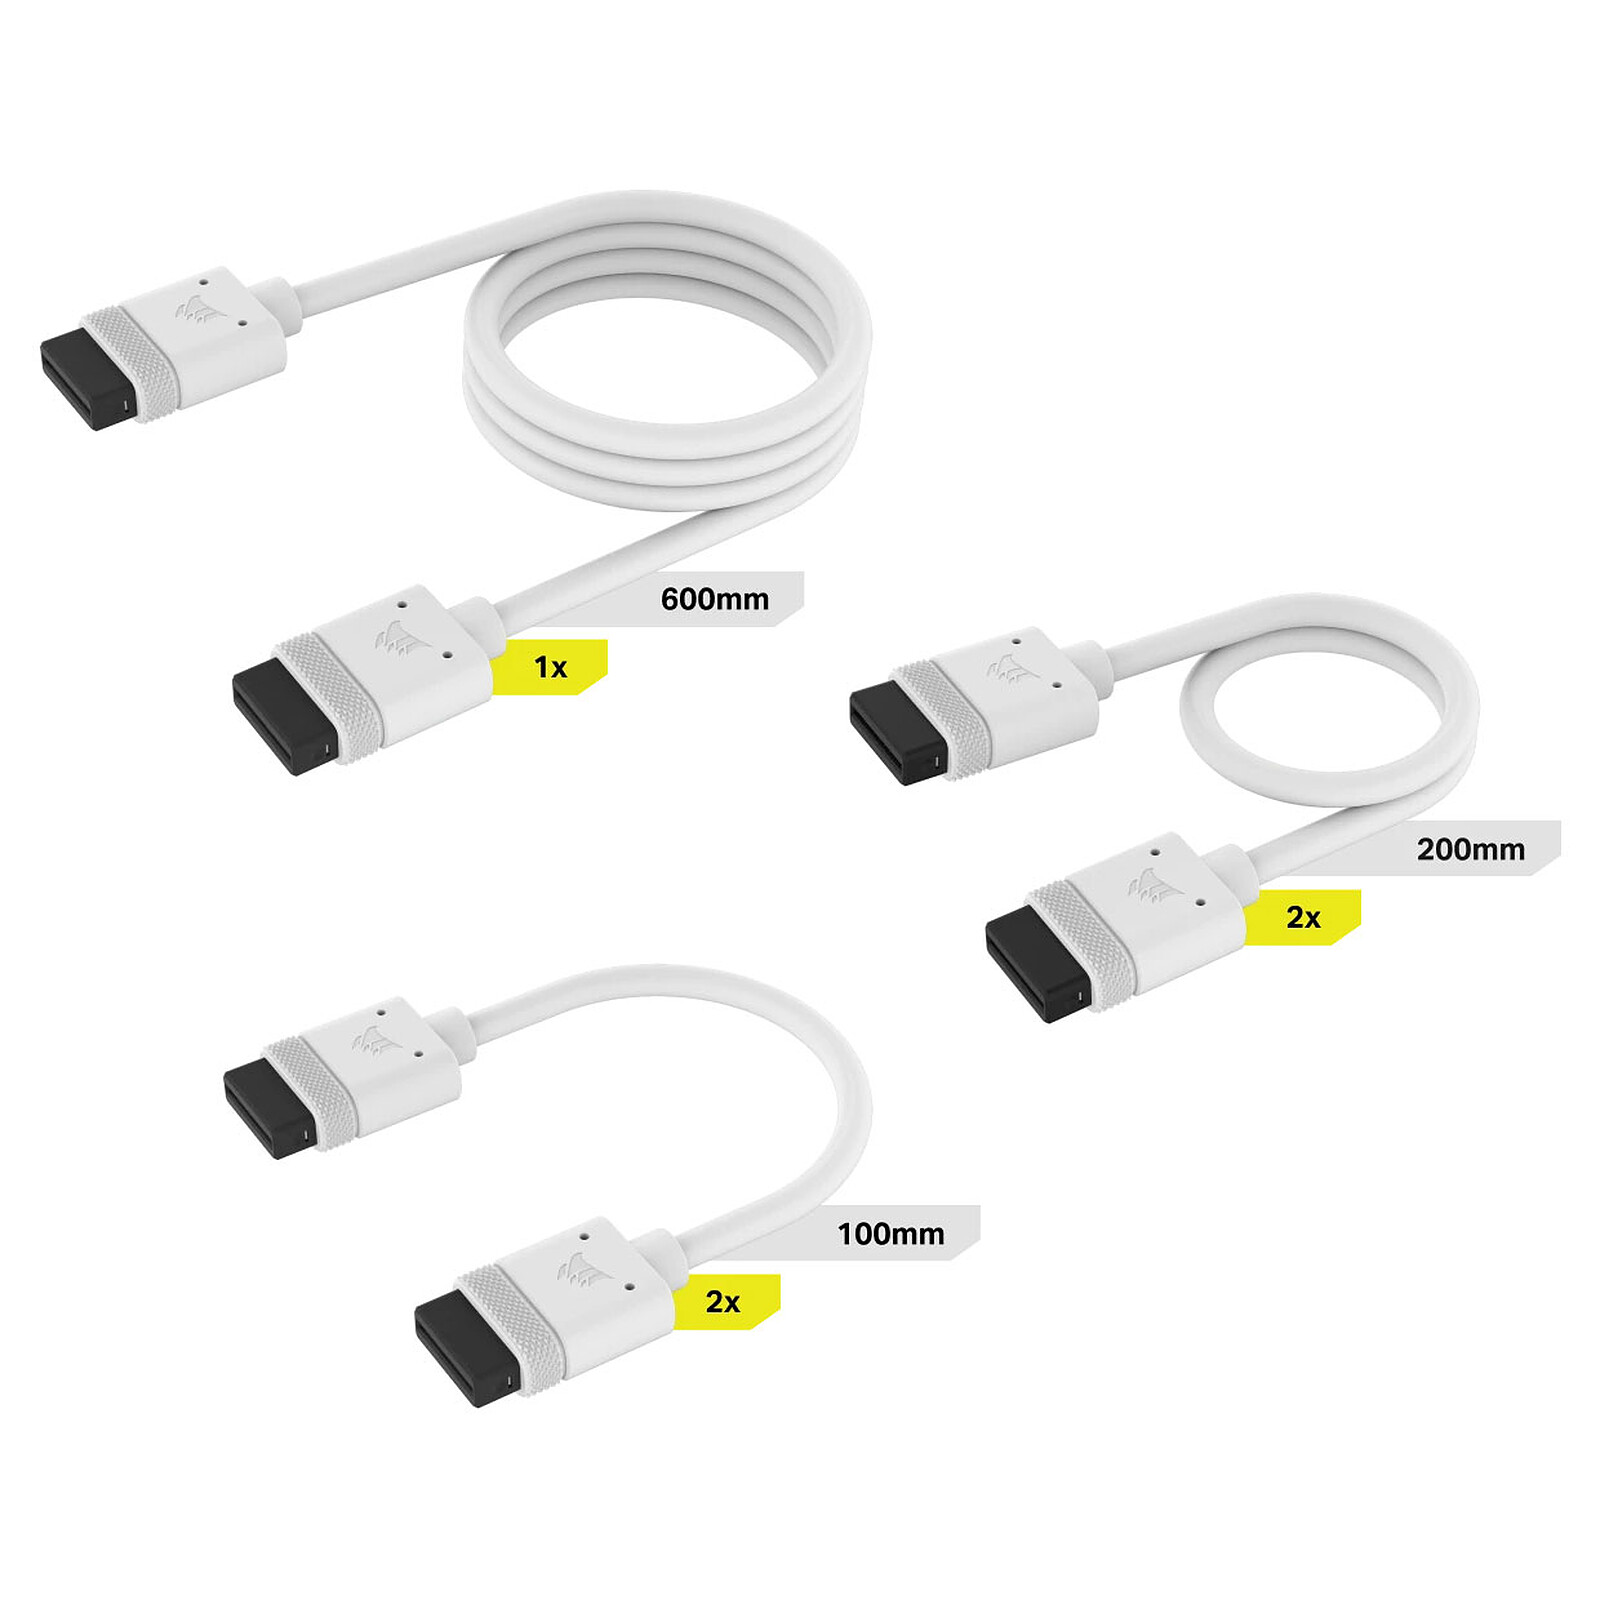 Corsair iCUE LINK Cable Kit w/ Straight Connectors, Black - LED